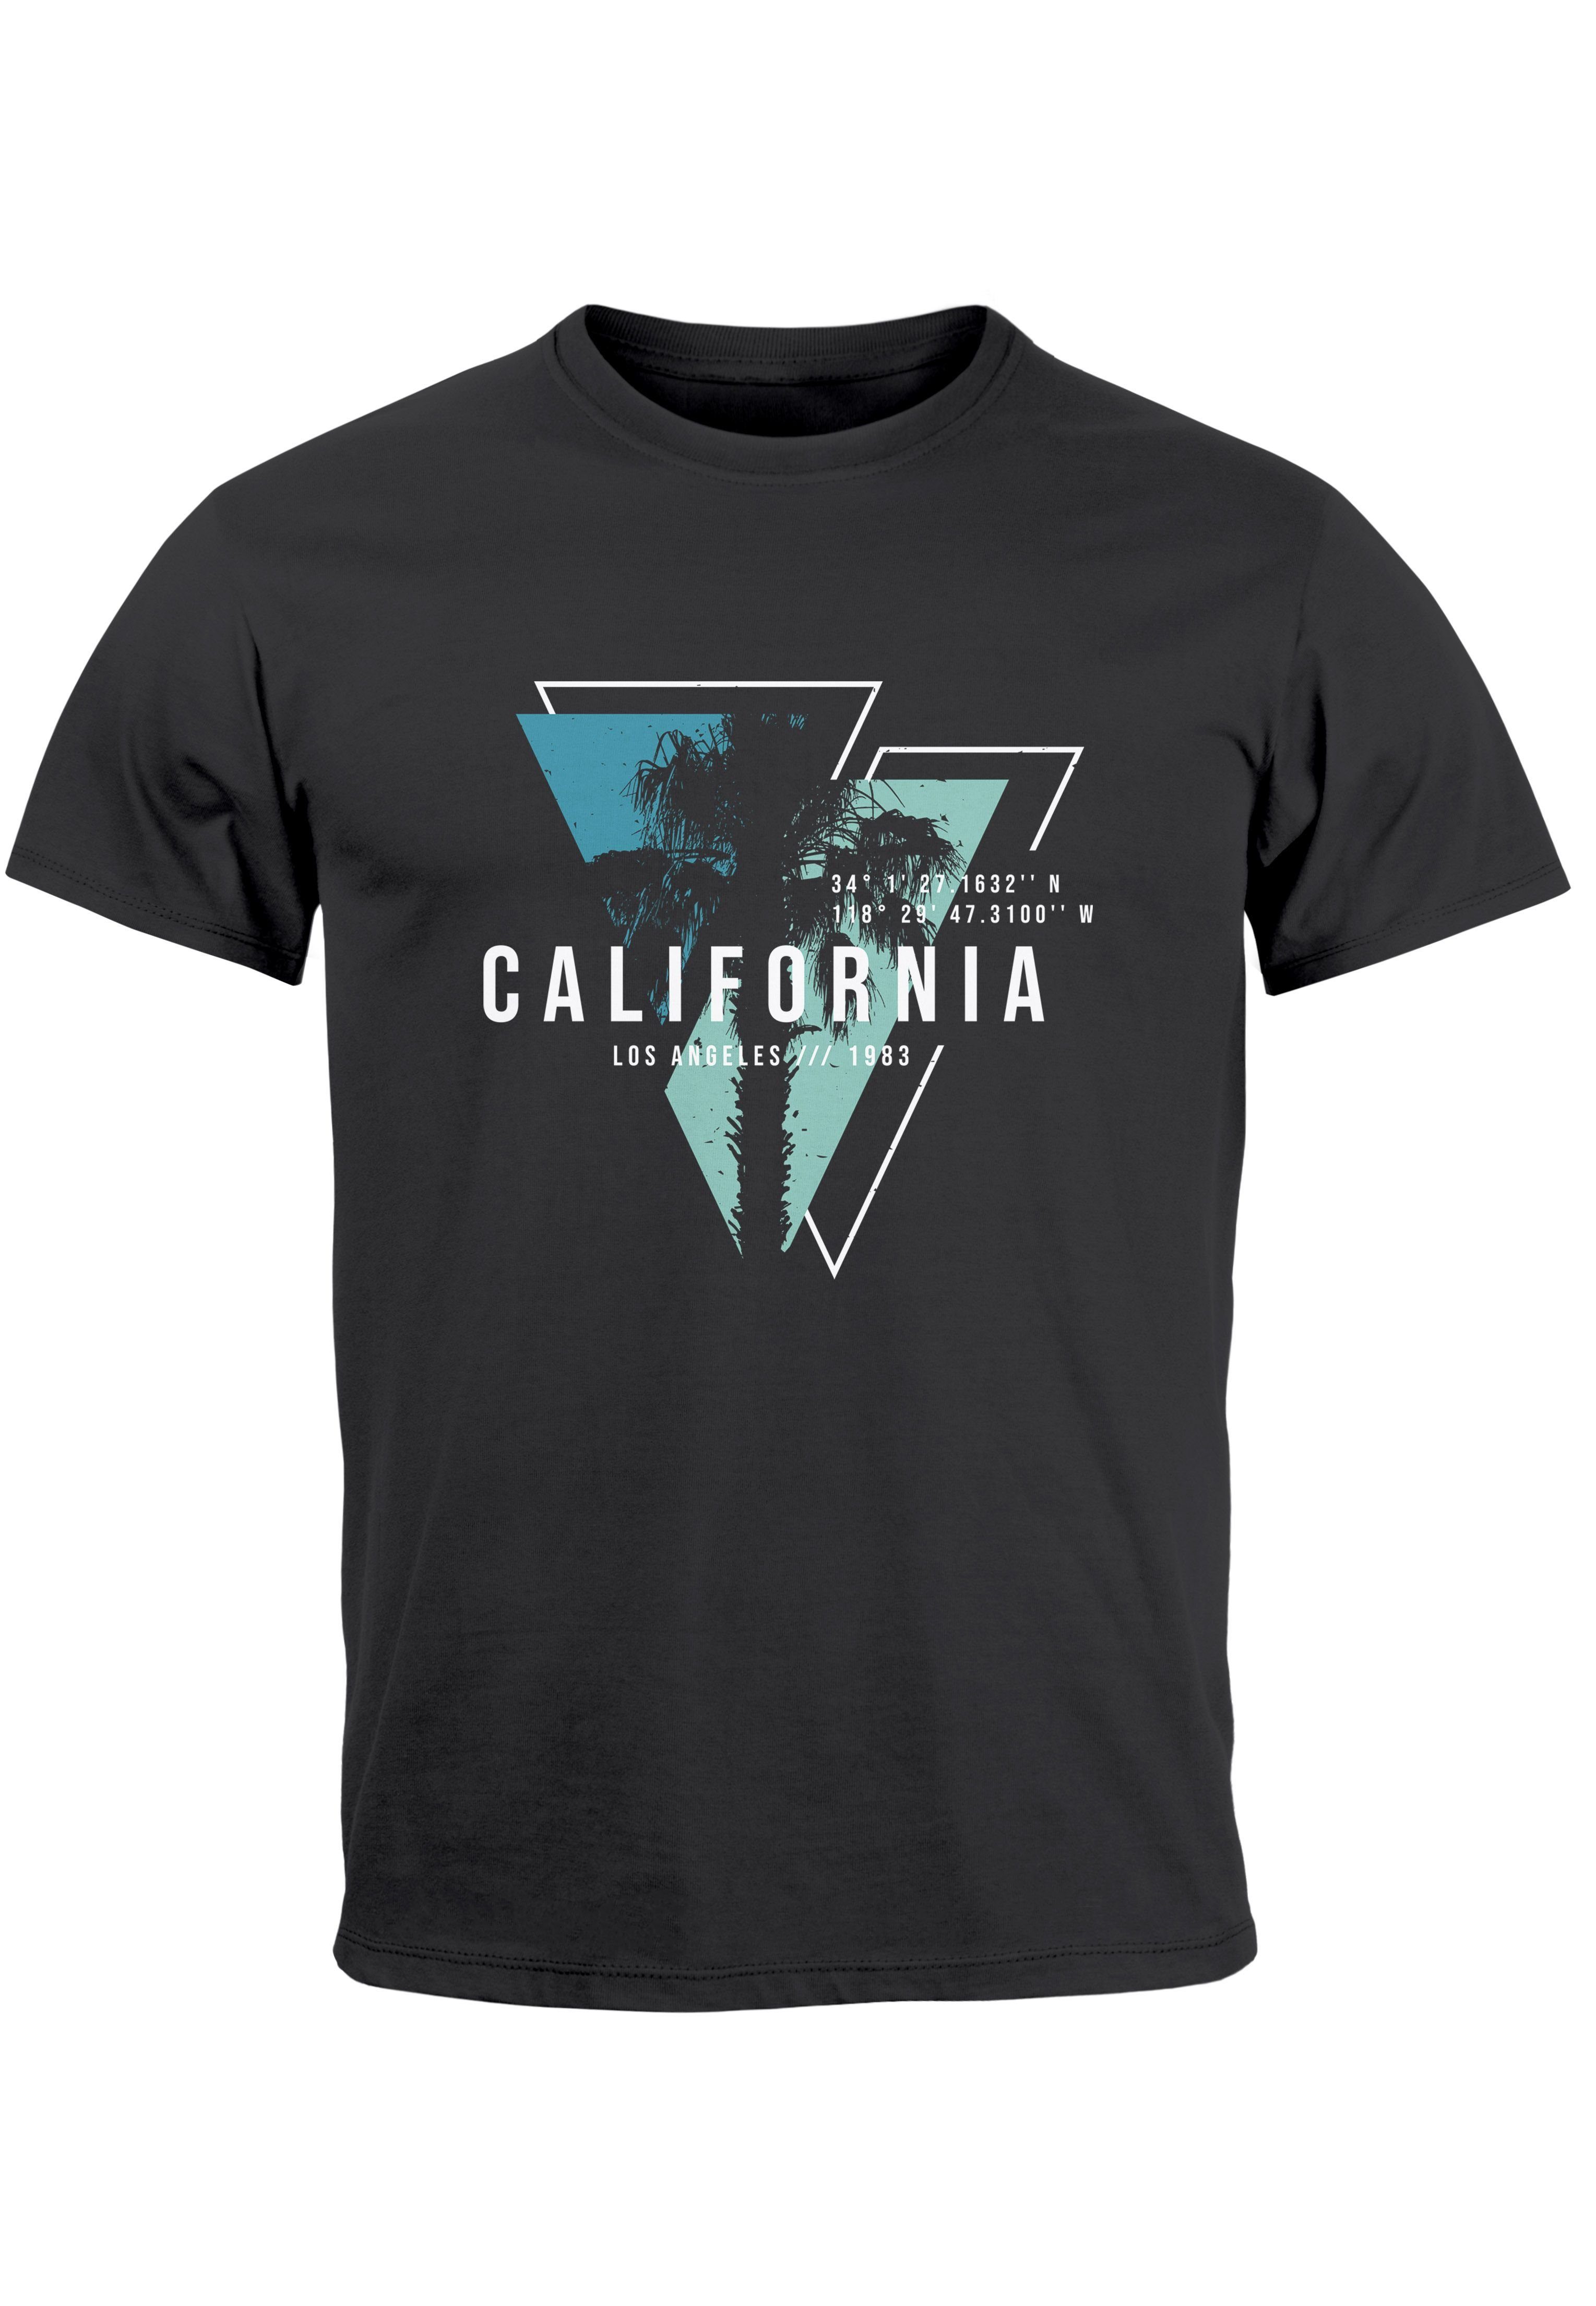 Neverless Print-Shirt Herren T-Shirt California Los Angeles Surfing Motiv Sommer Fashion USA mit Print anthrazit-blau